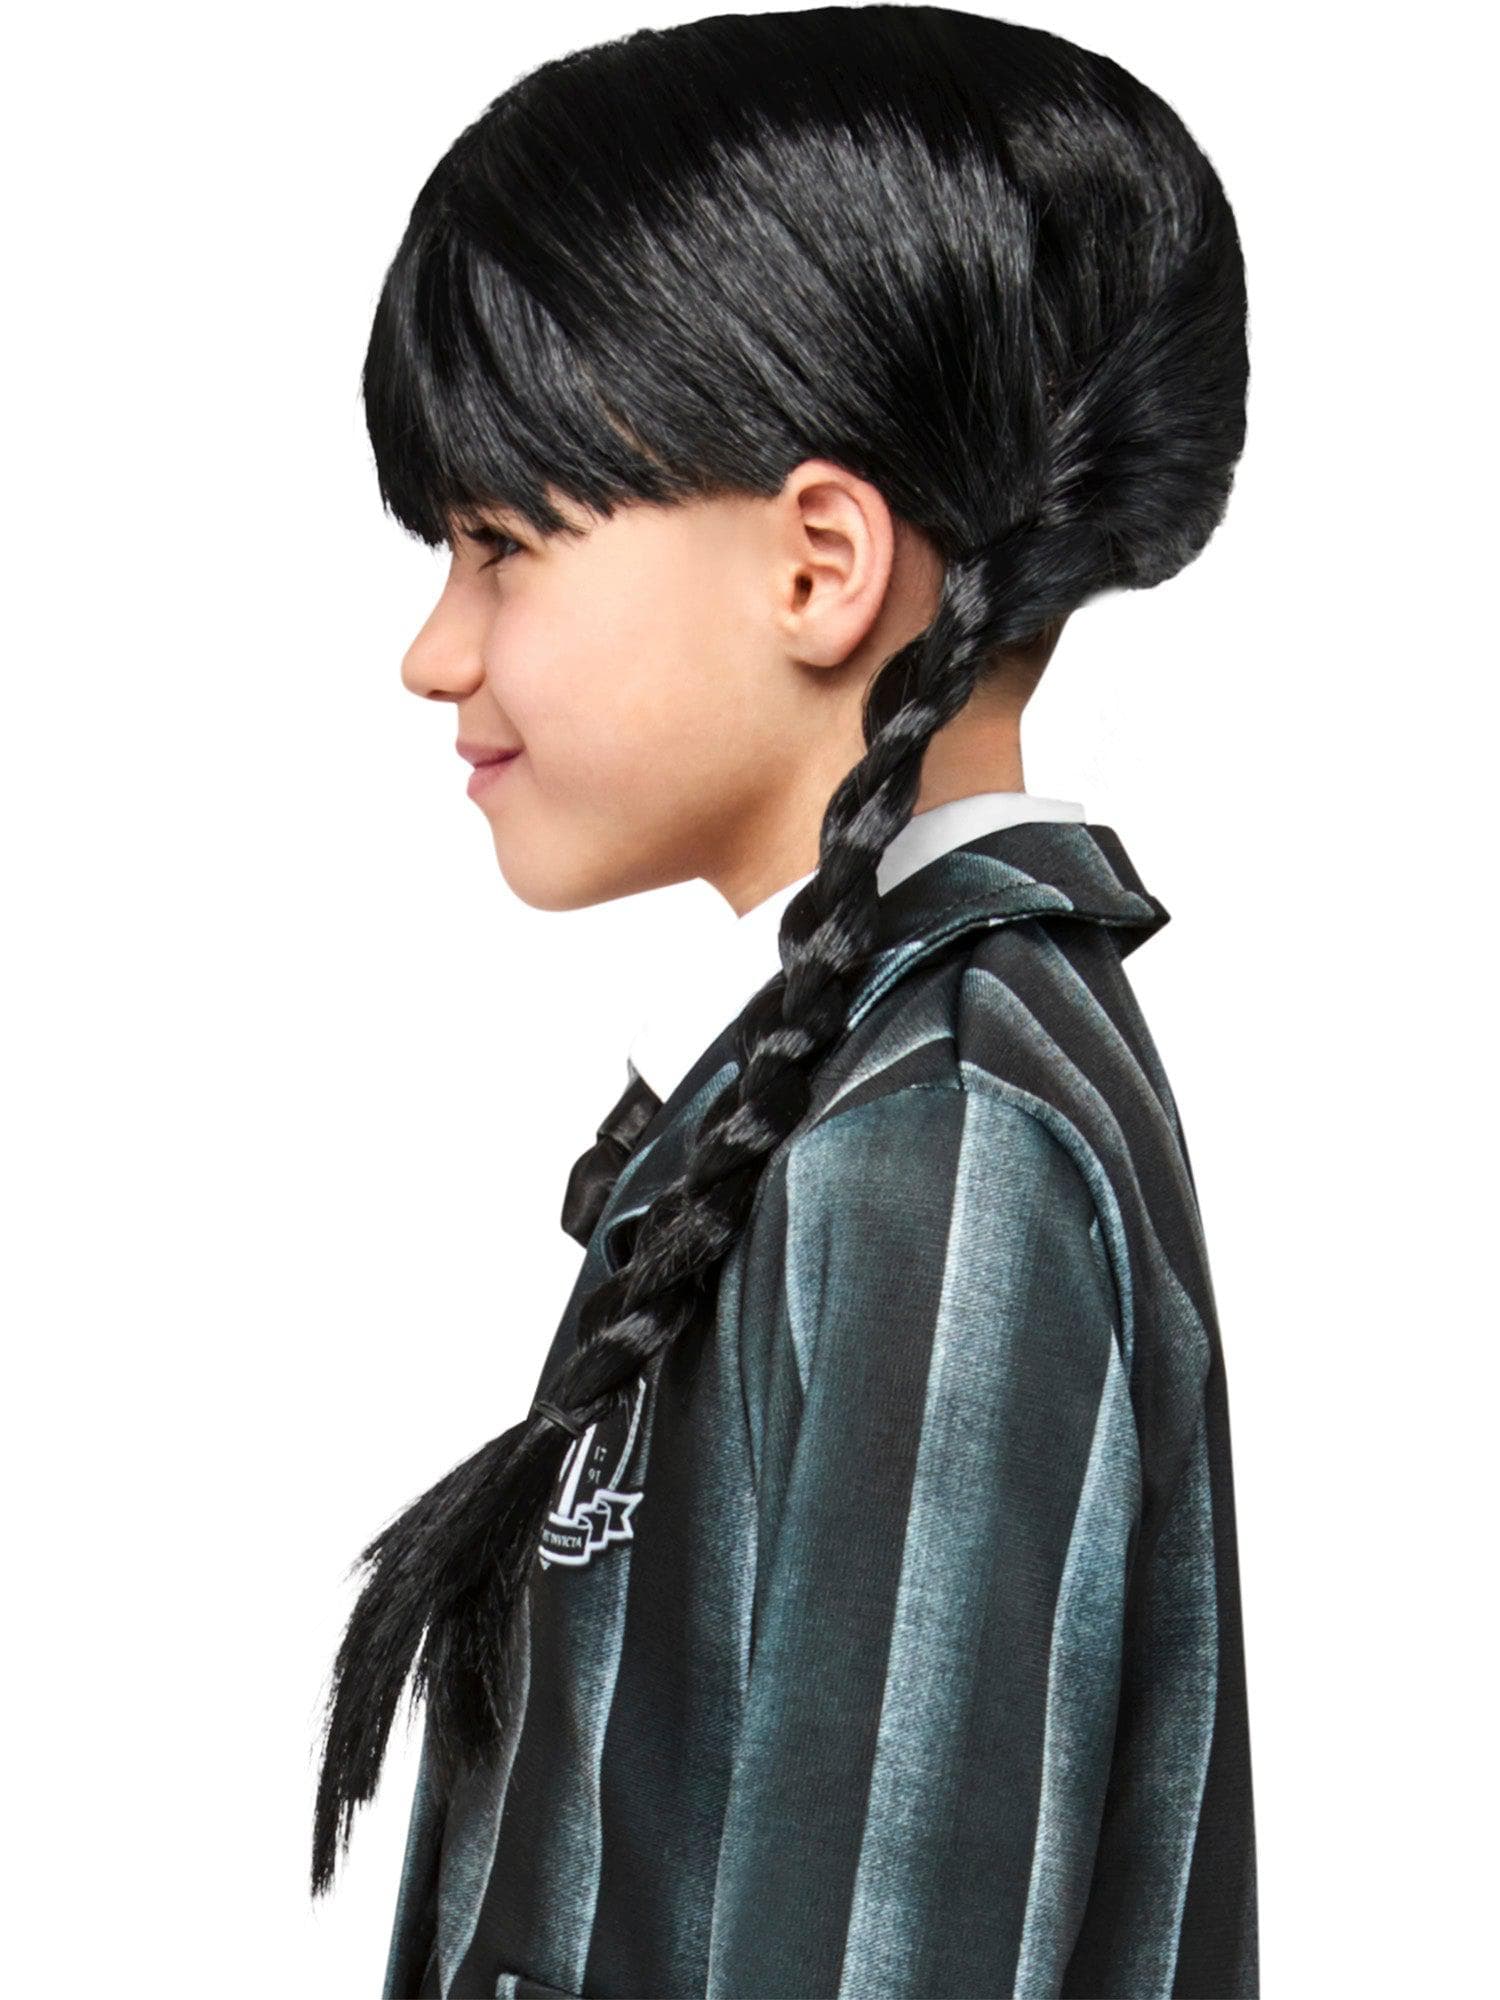 Girls' Wednesday Addams Wig - costumes.com